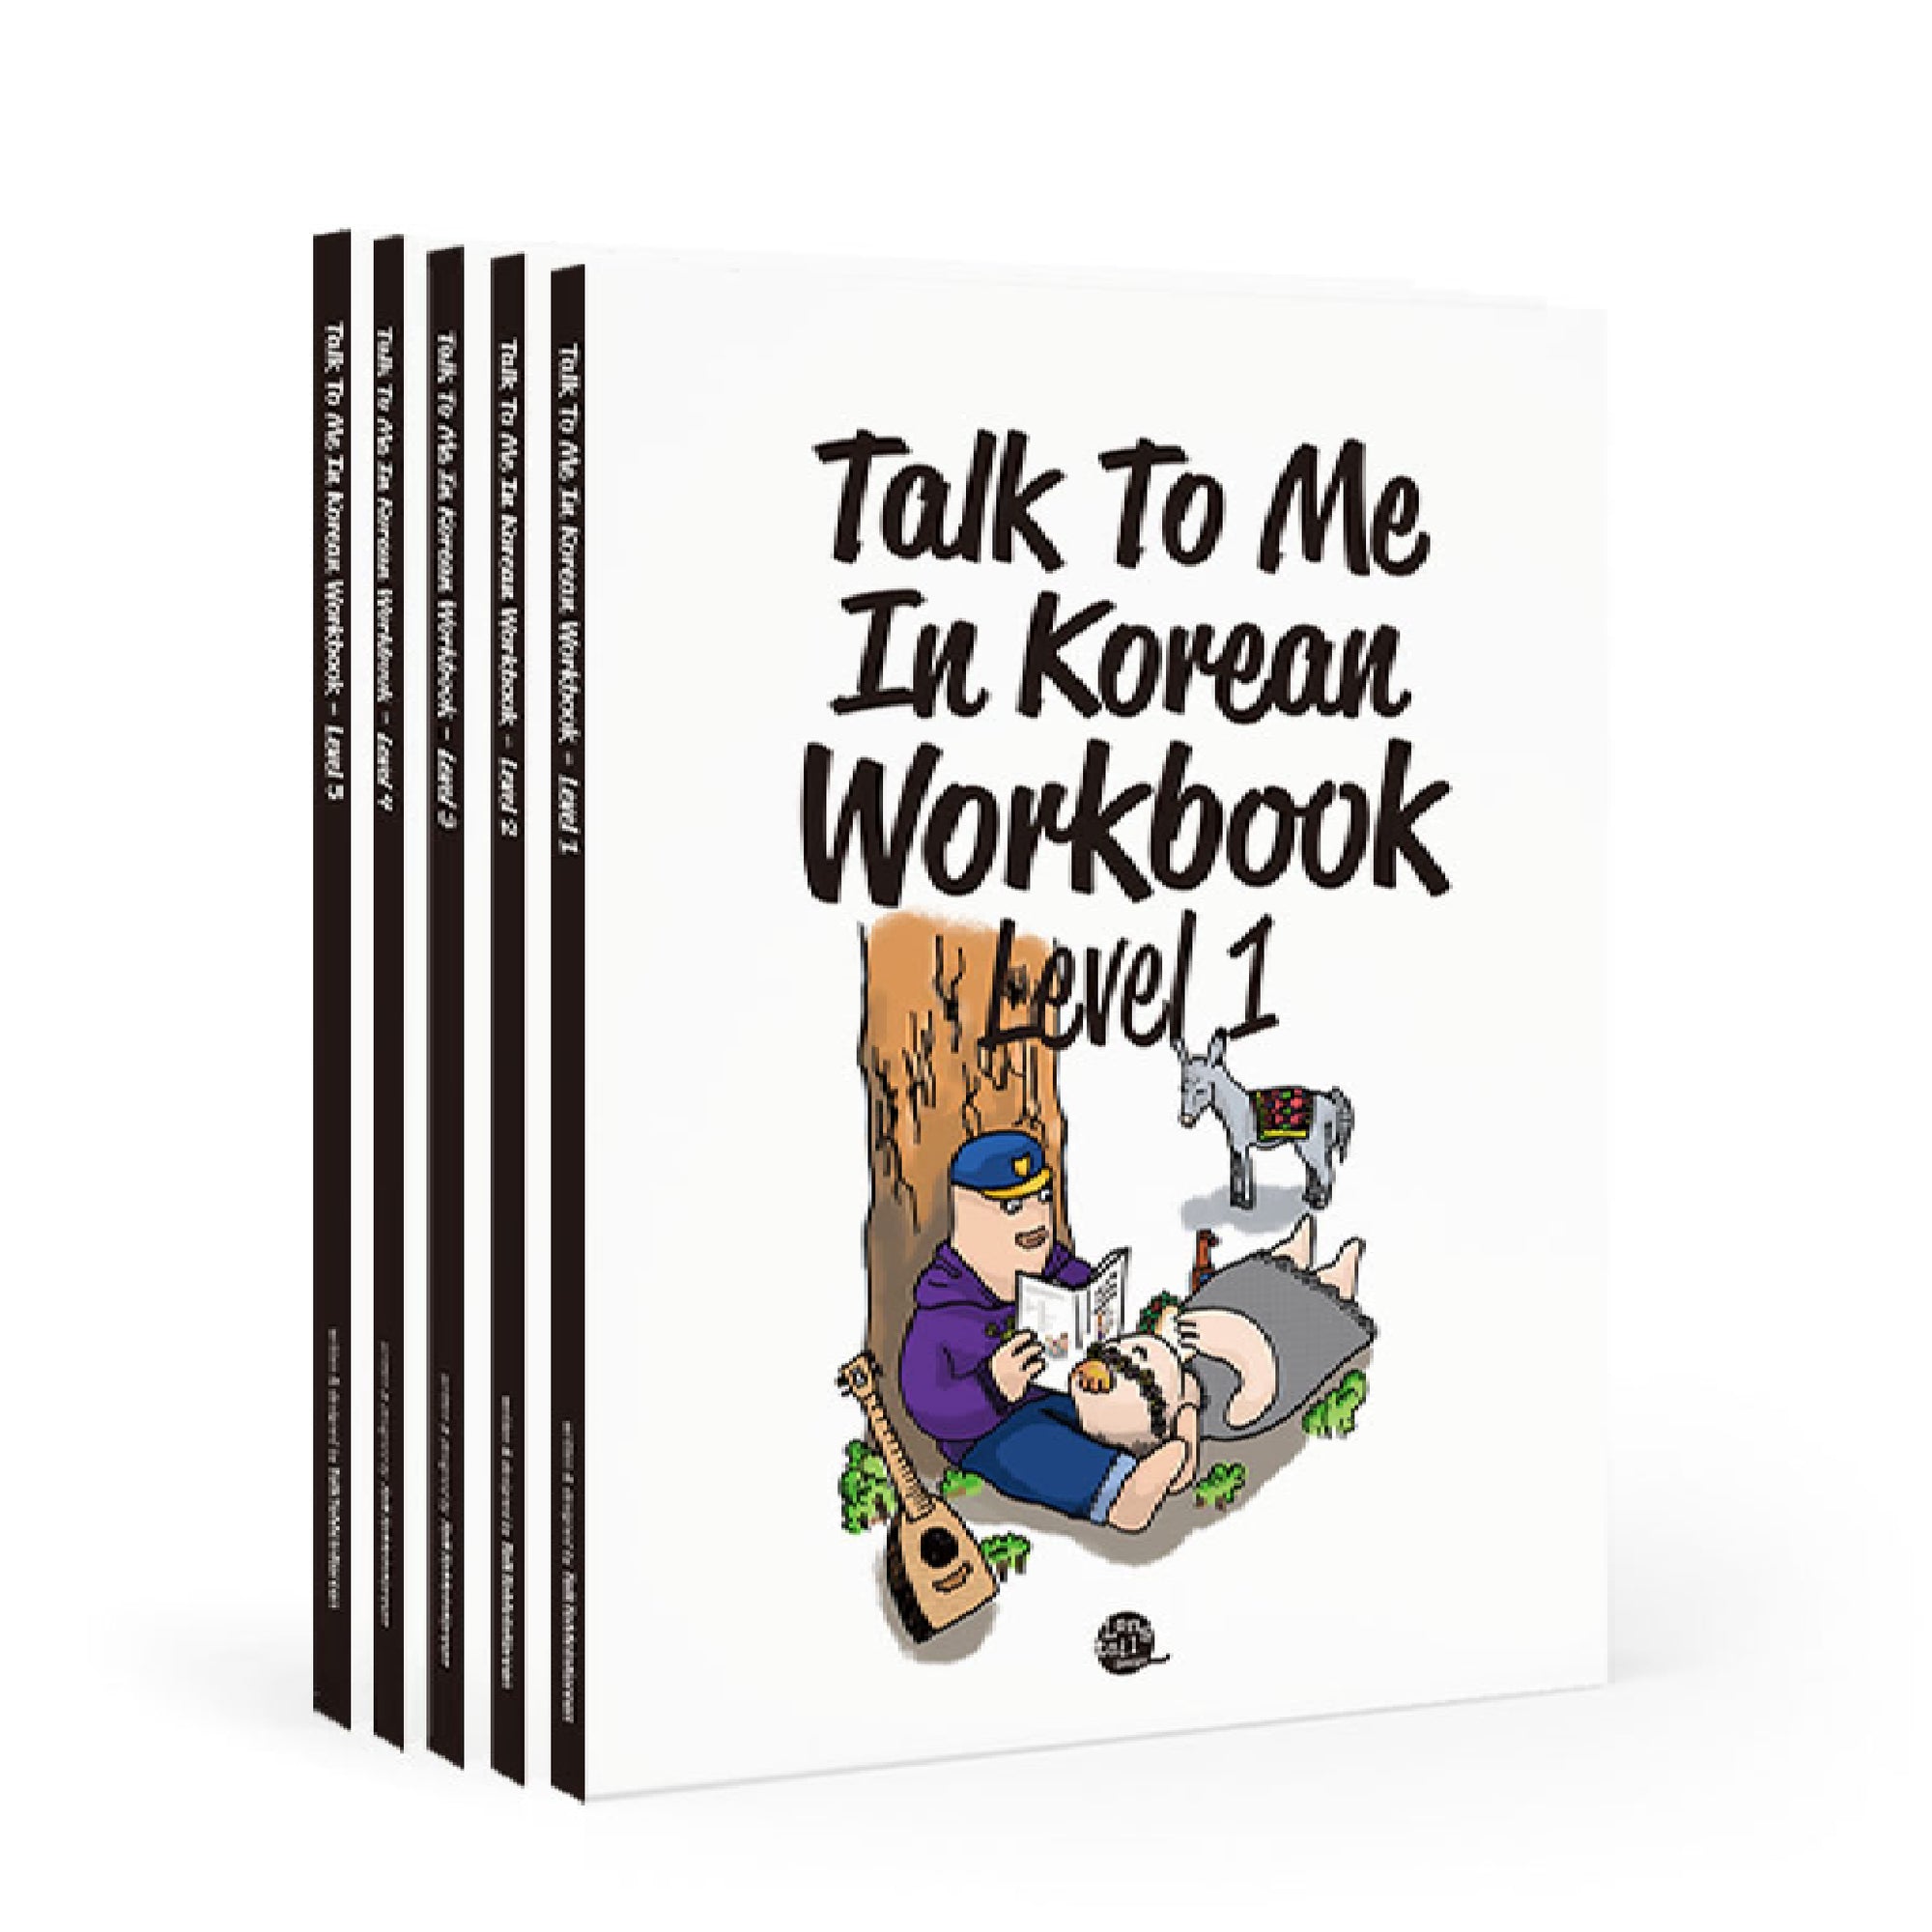 TALK TO ME IN KOREAN WORKBOOK